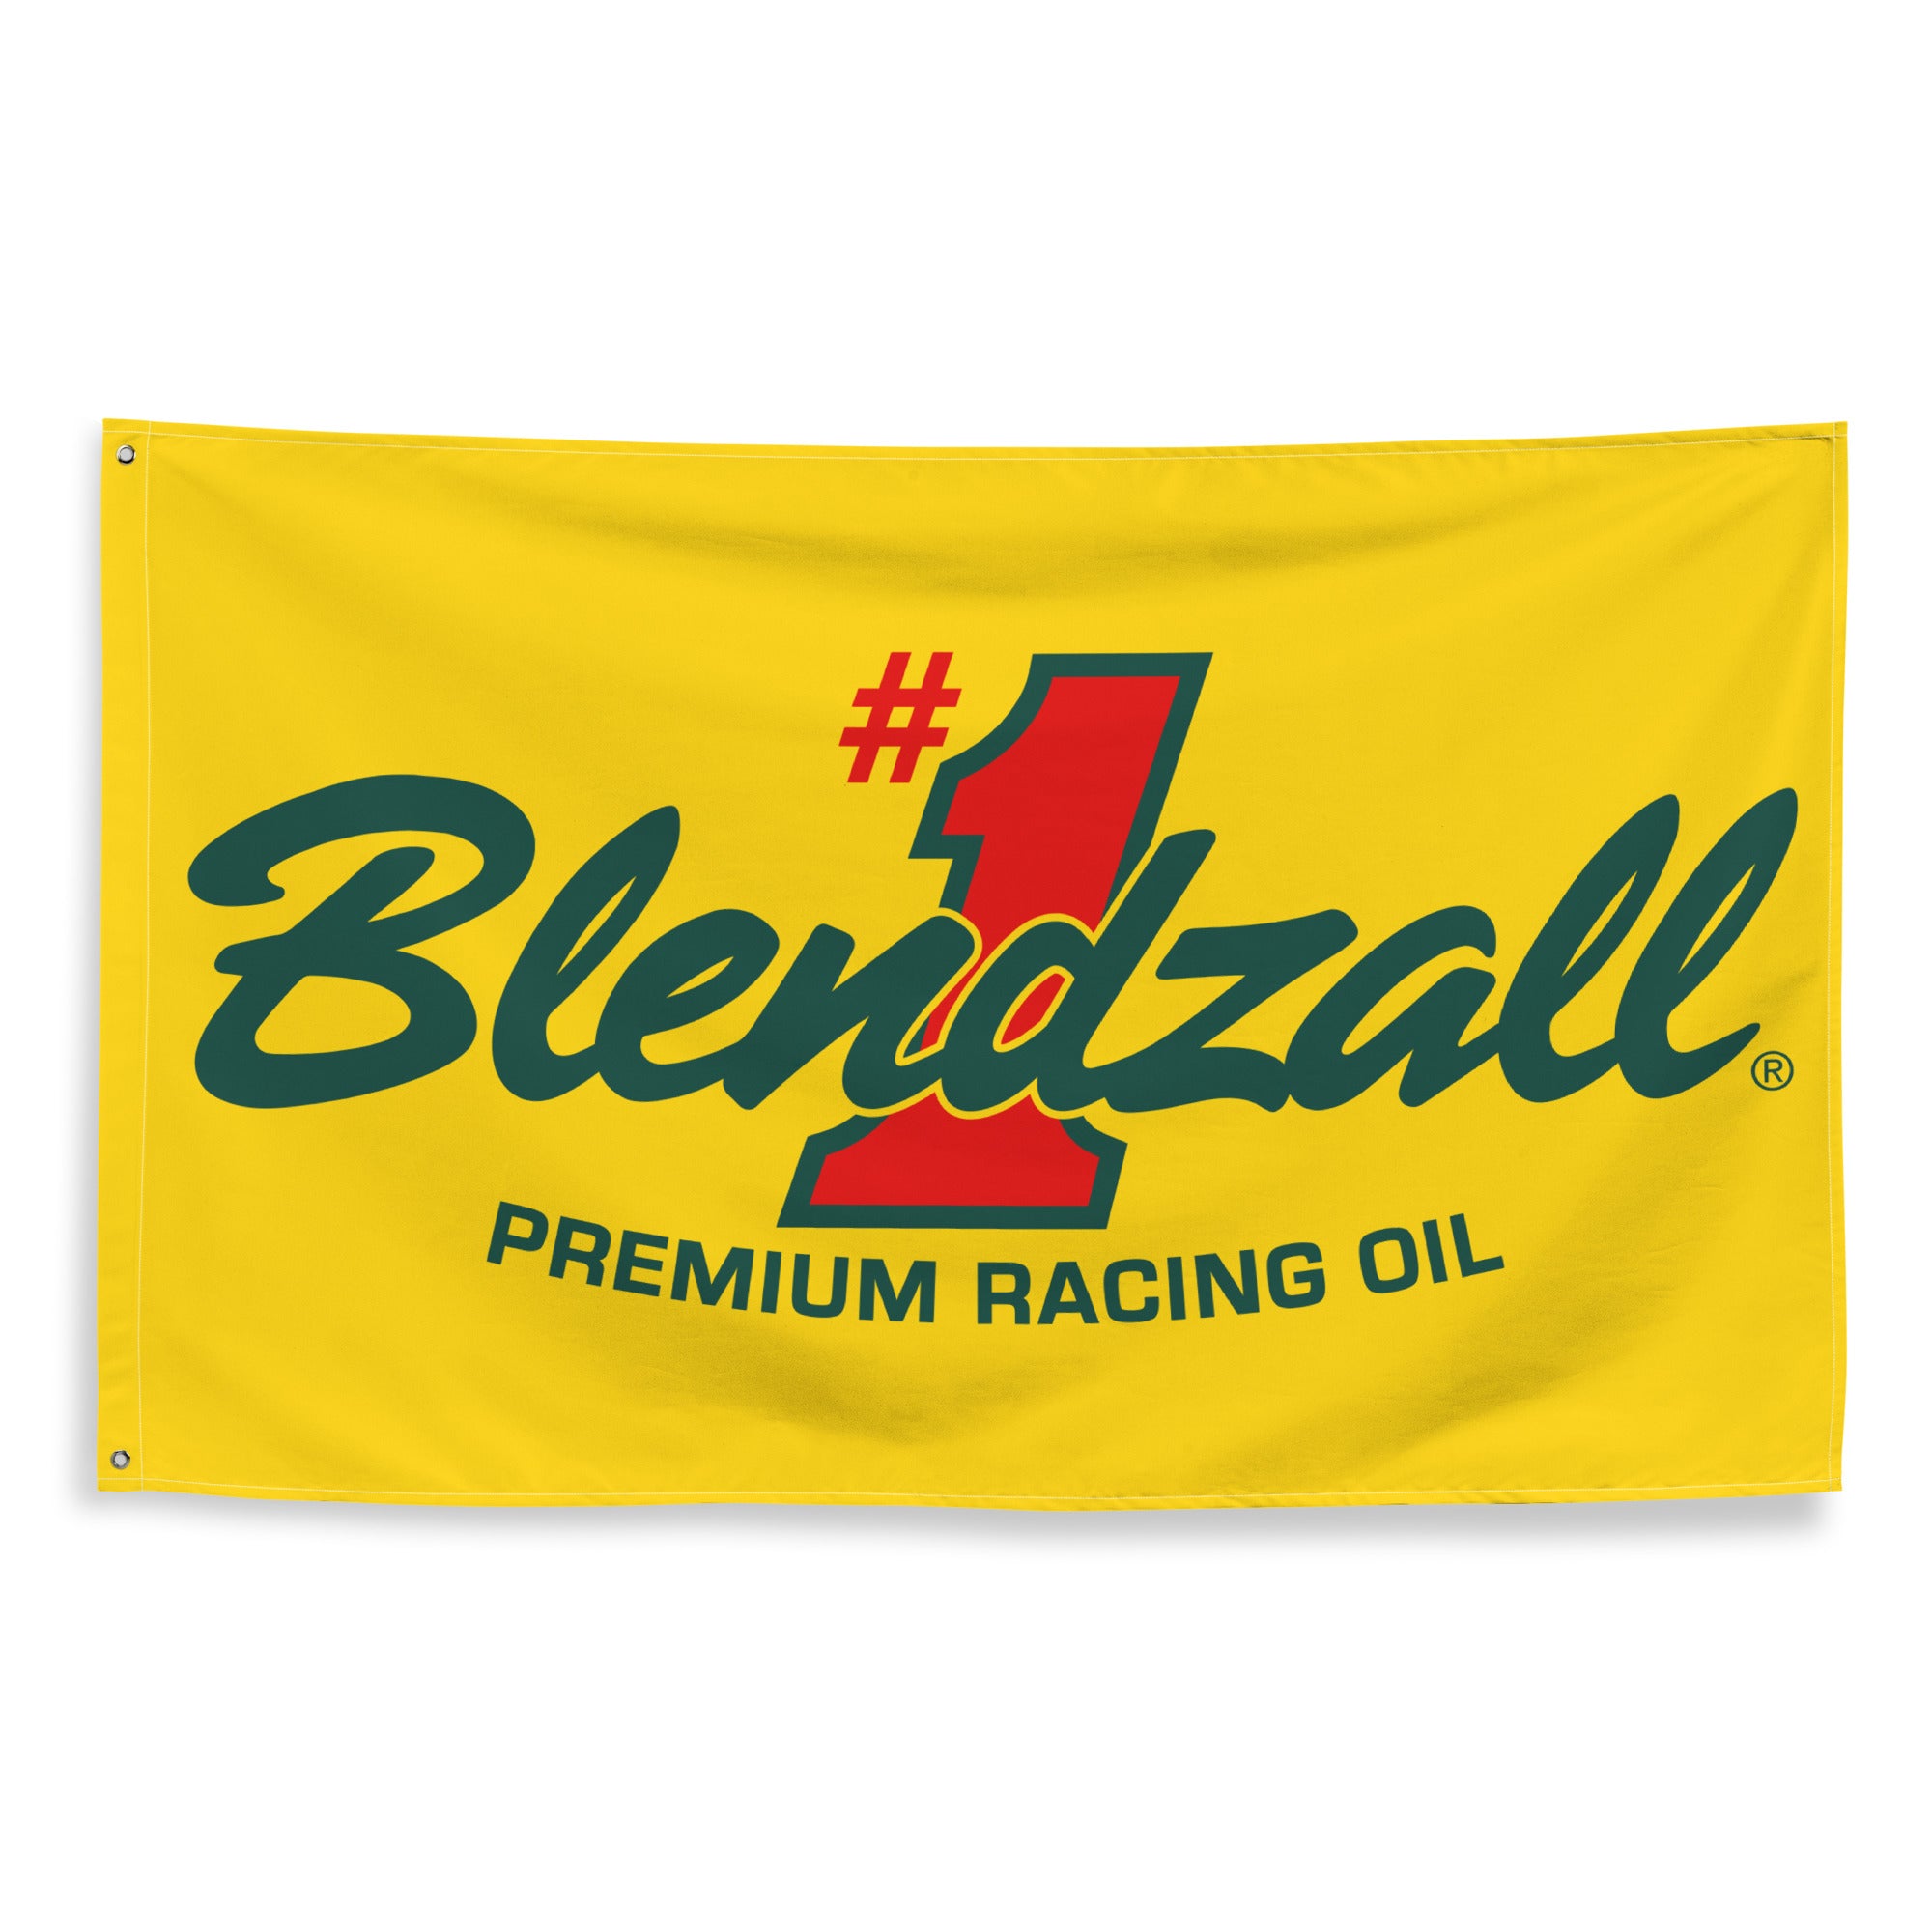 Blendzall #1 Flag